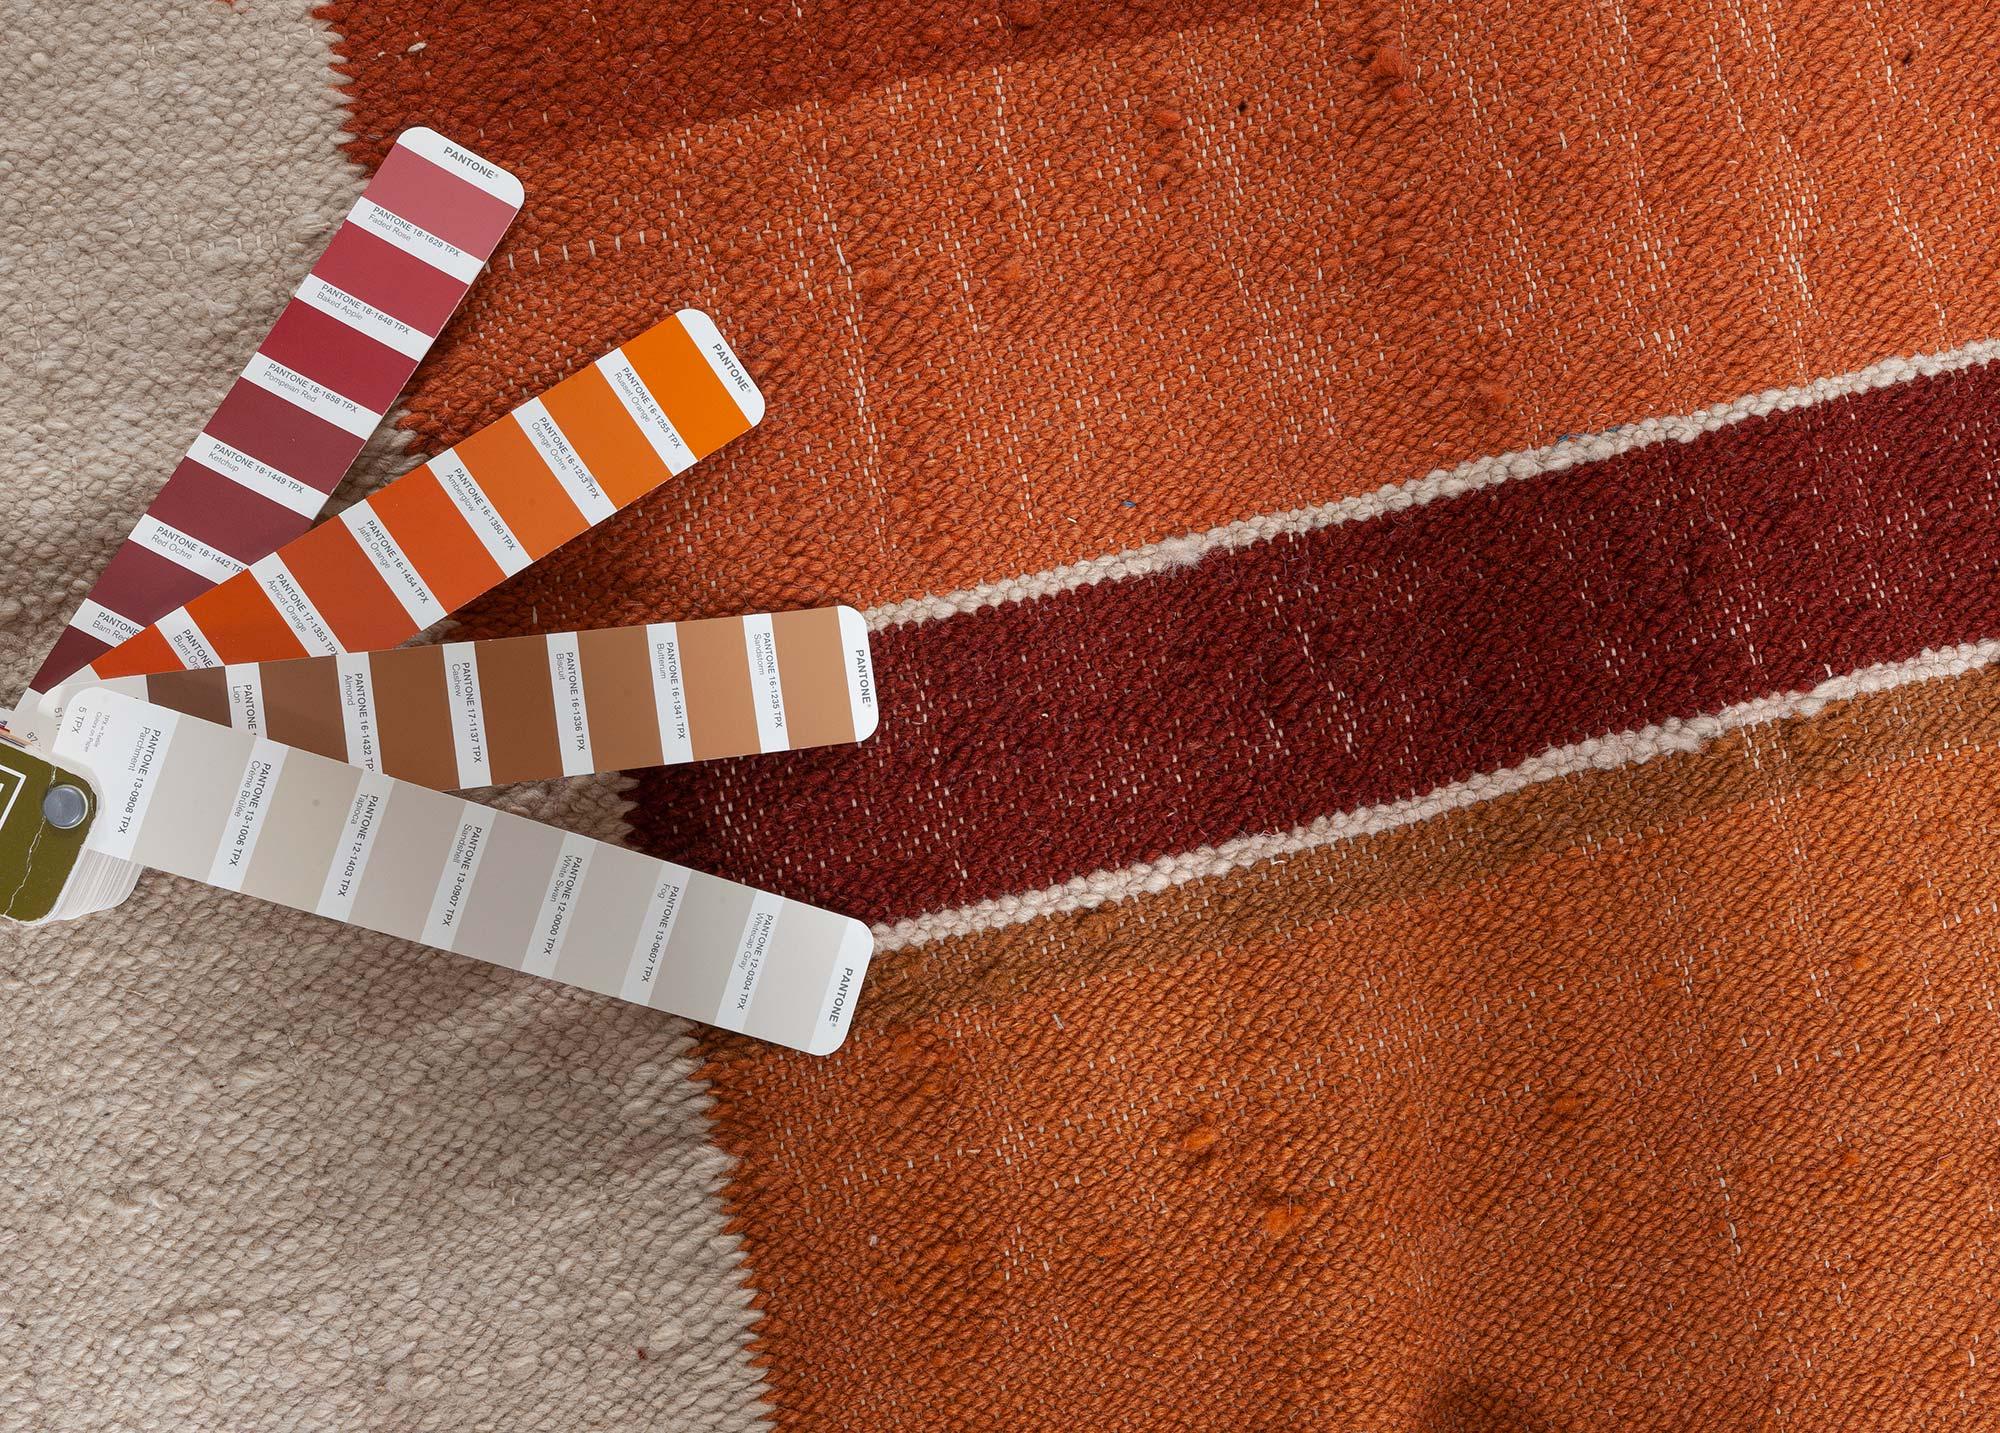 Vintage Swedish striped pattern rug
Size: 9'2